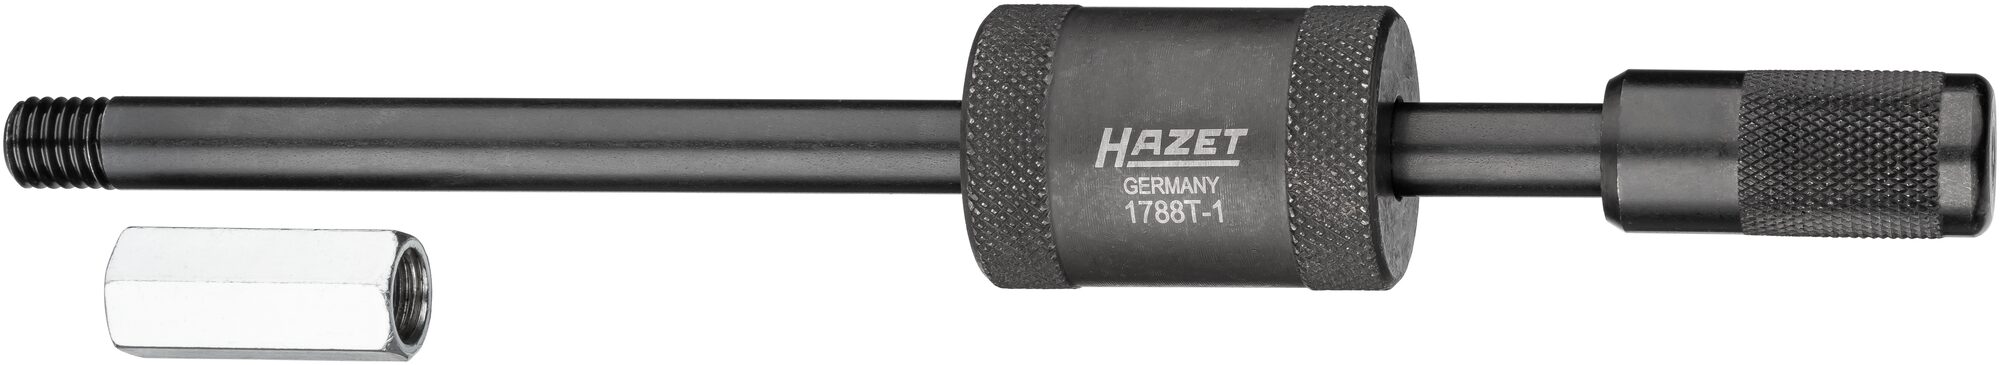 HAZET Schlag-Ausziehgerät 1788T-1